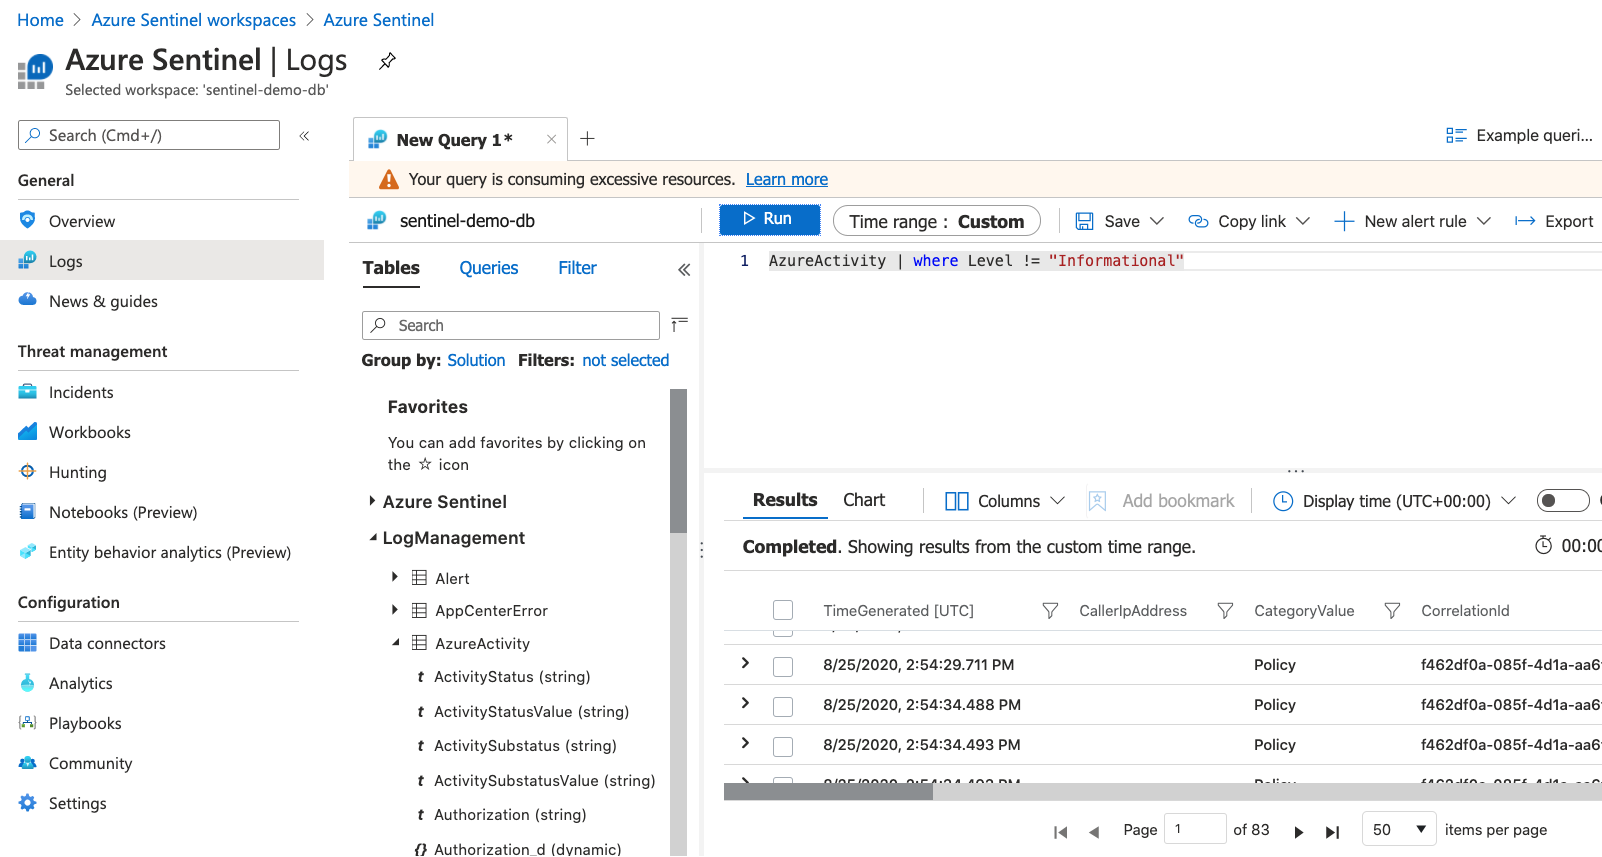 Screenshot showing the Log Analytics interface in the Azure portal.